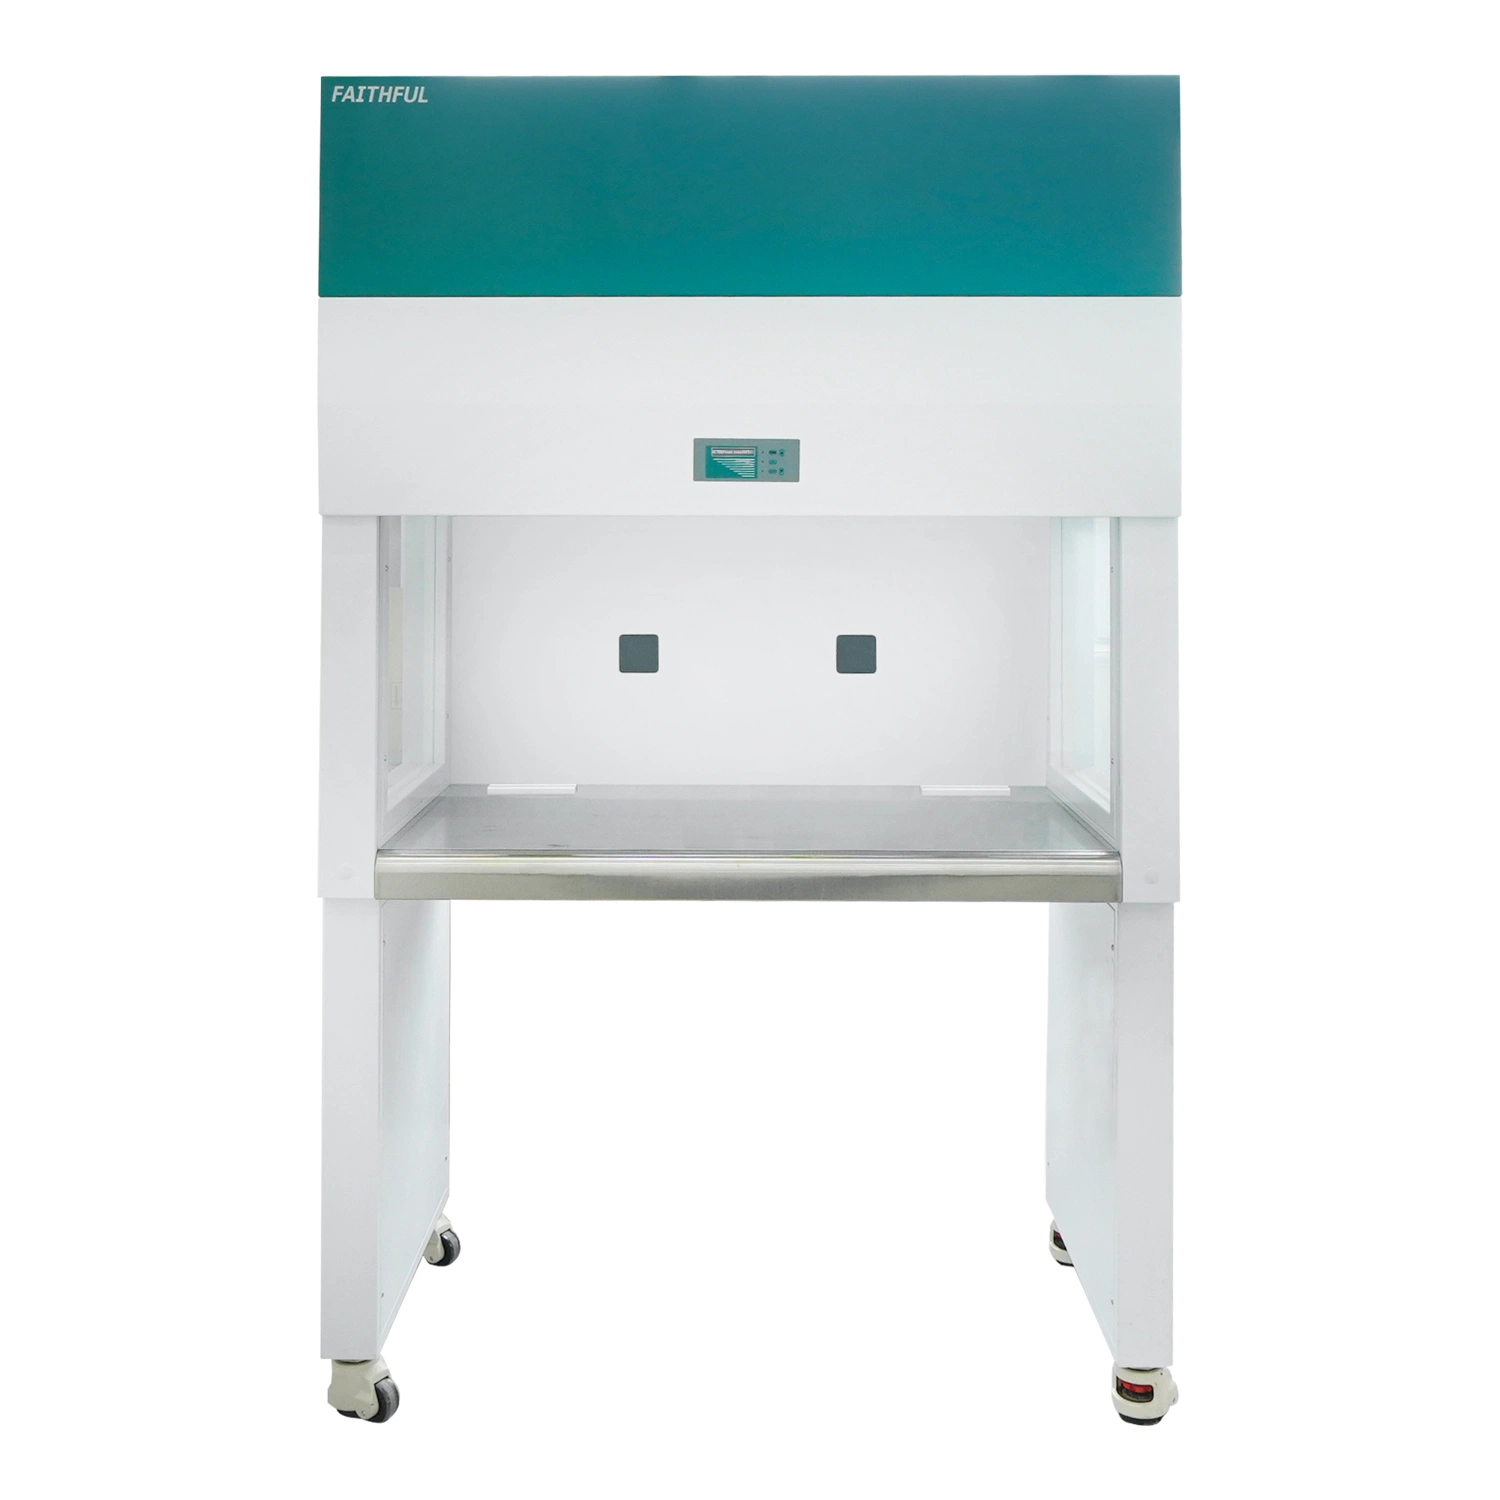 Laminar Flow Cabinet (Vertical Type) Laboratory Equipment Laboratory Furniture